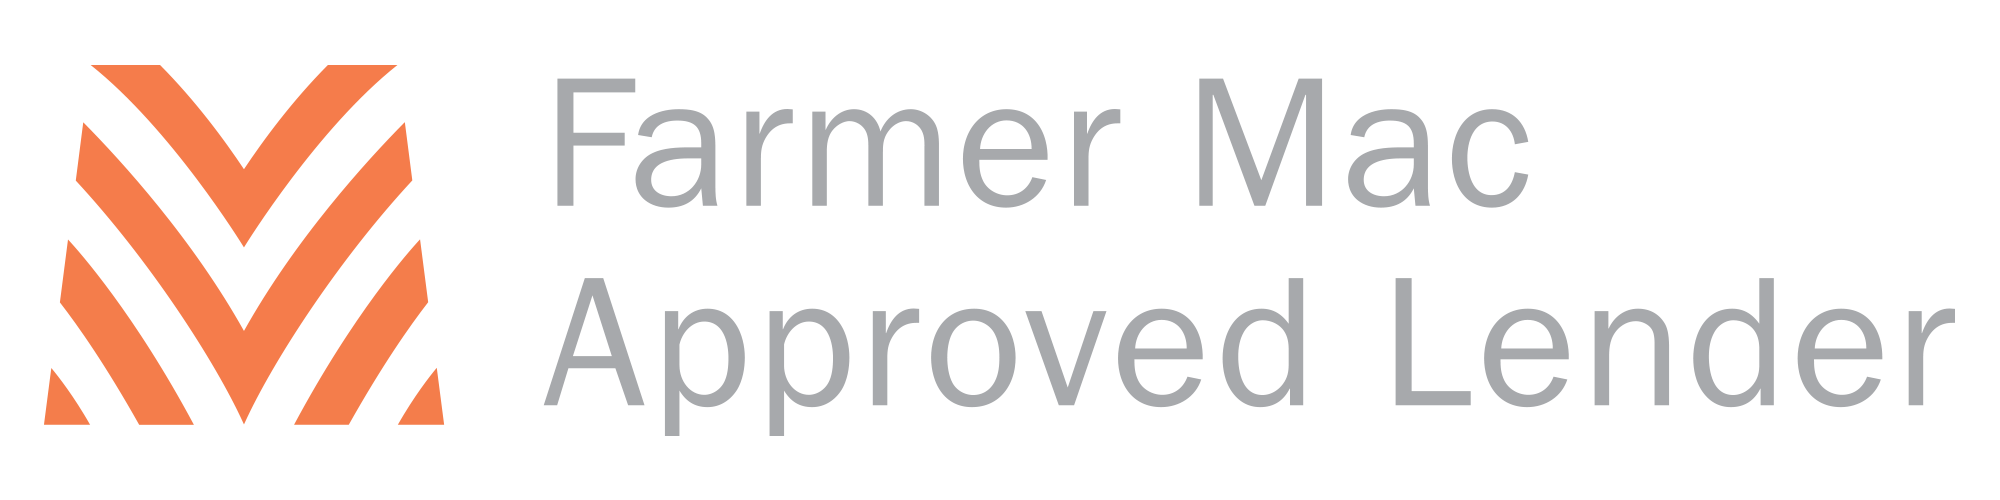 Farmer Mac logo